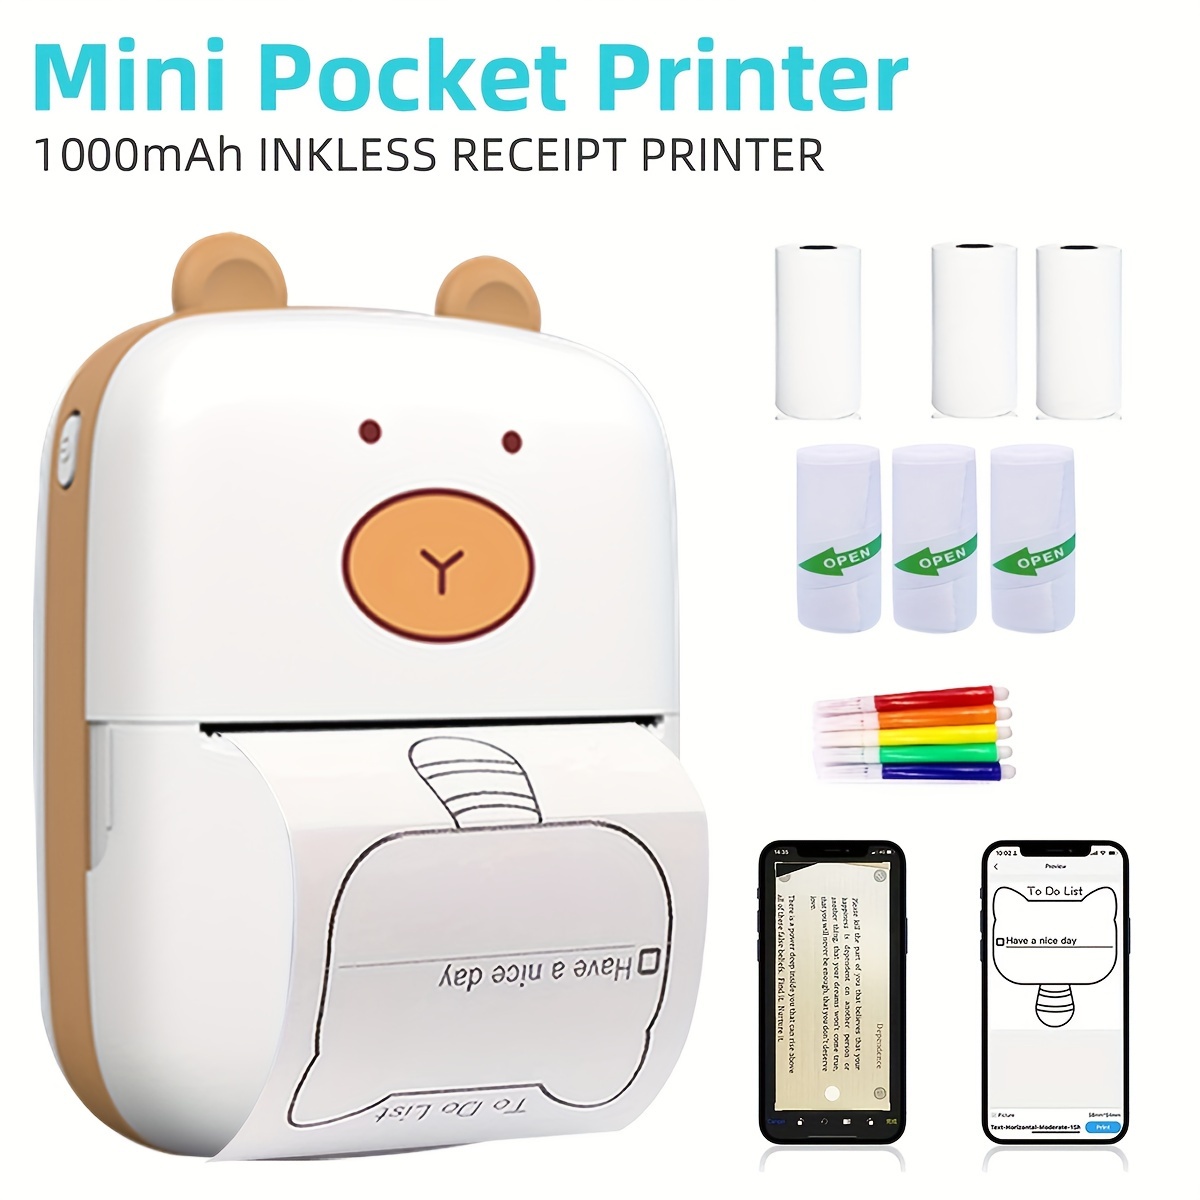 Portable Mini Pocket Printer - Thermal Sticker Maker for iOS